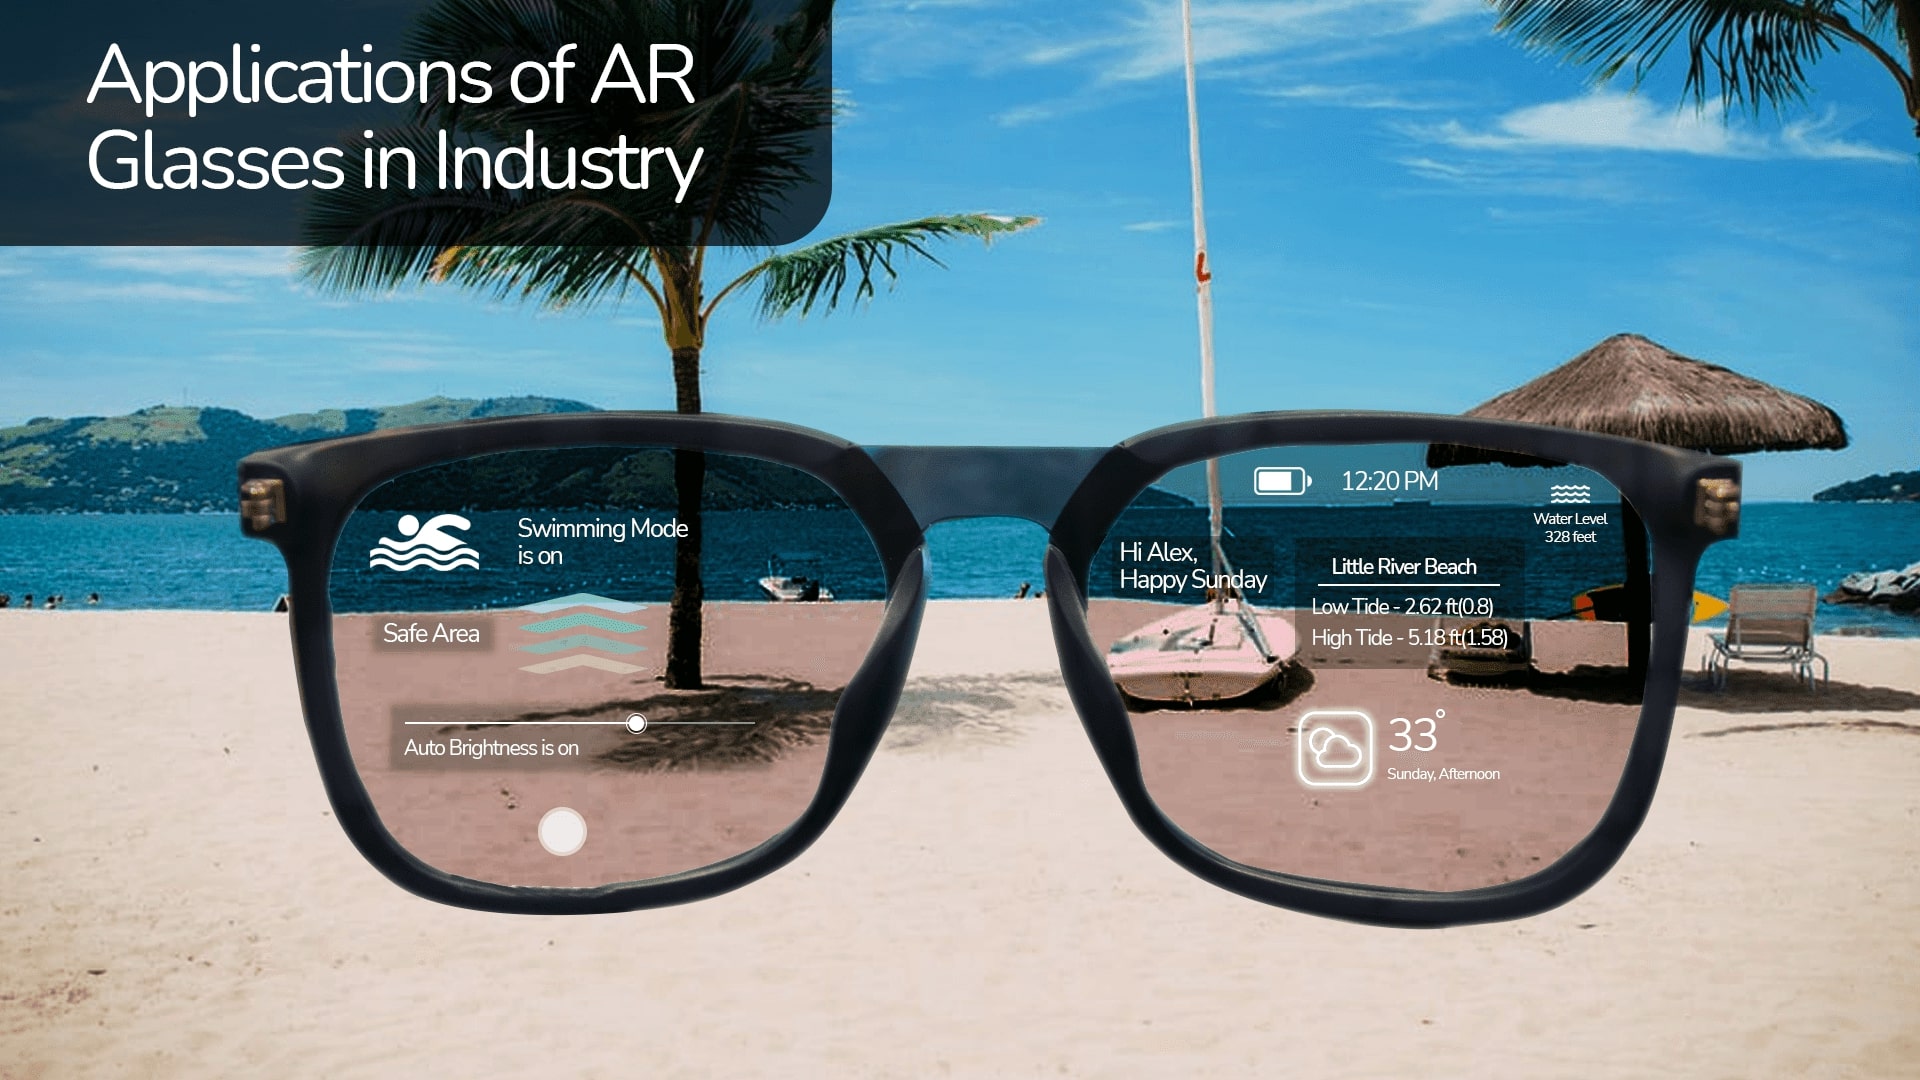 Applications of AR Glasses